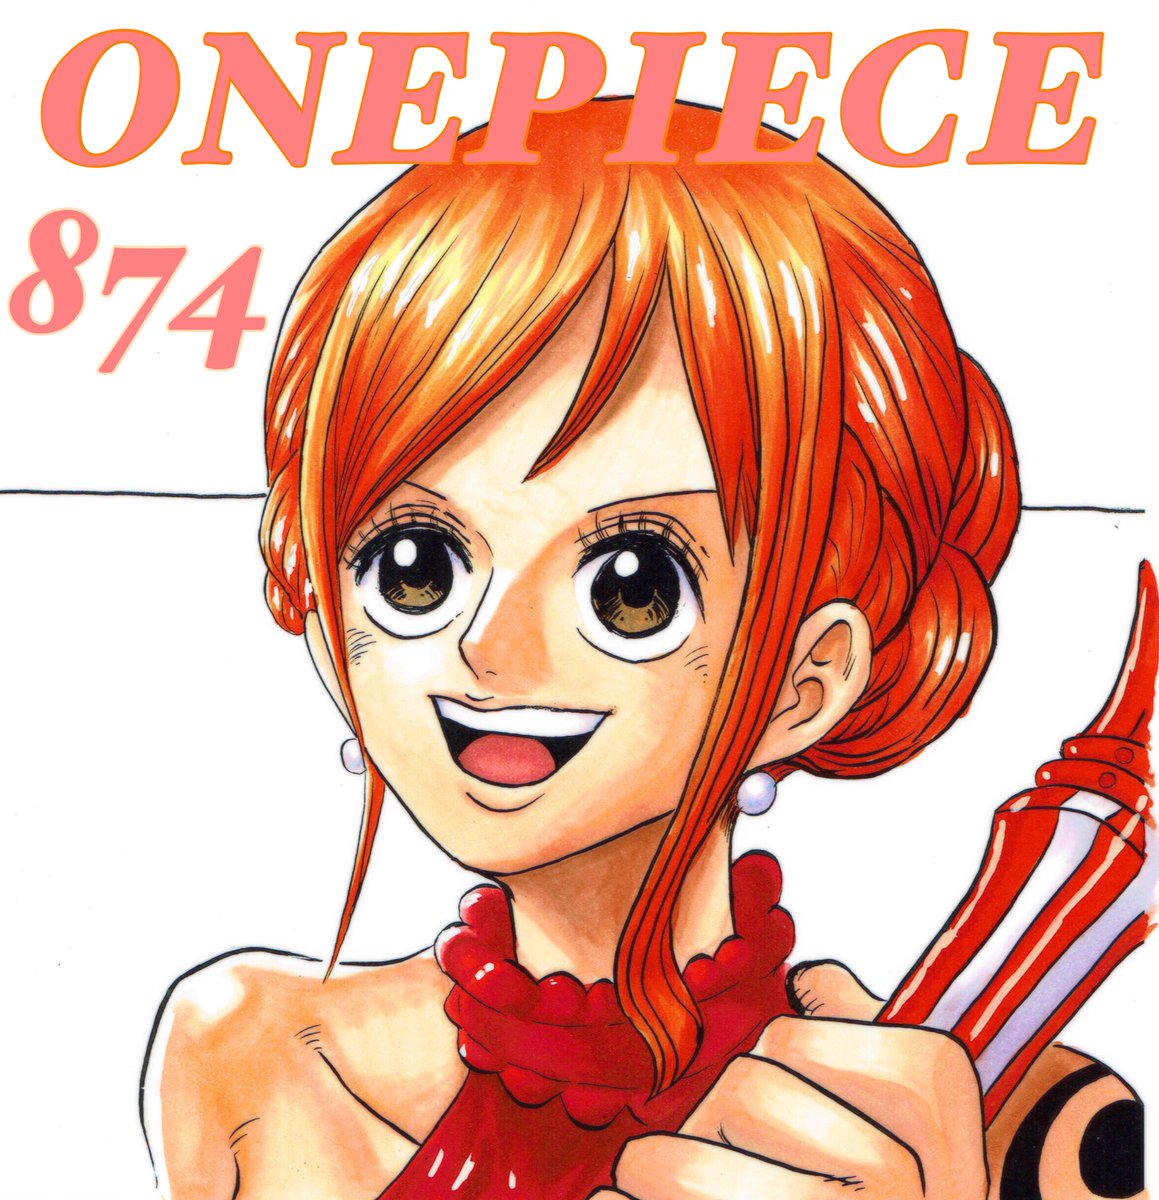 Hatsu S Colorpage 私のしもべになる One Piece 第874話 私のしもべになりなさい より T Co Yfpnh1zvta Twitter